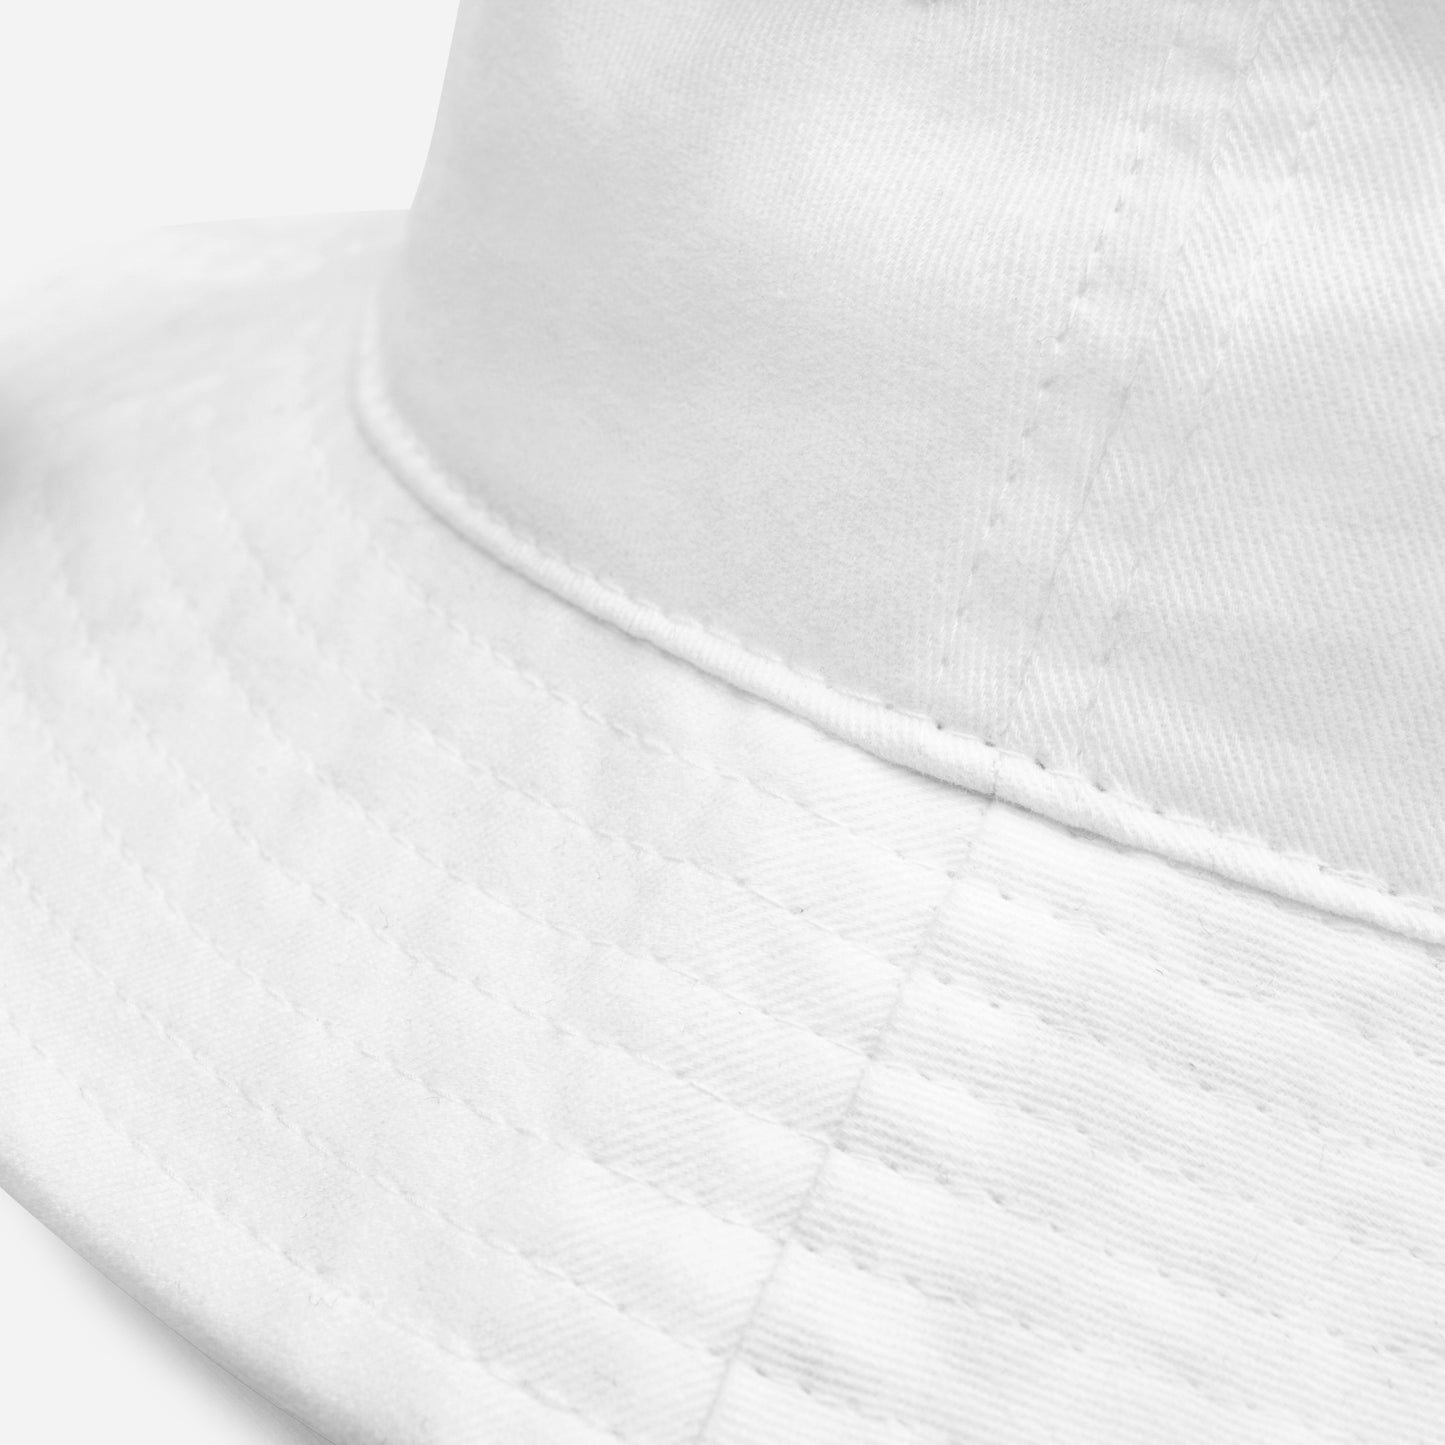 BE PATIENT Bucket Hat (White)